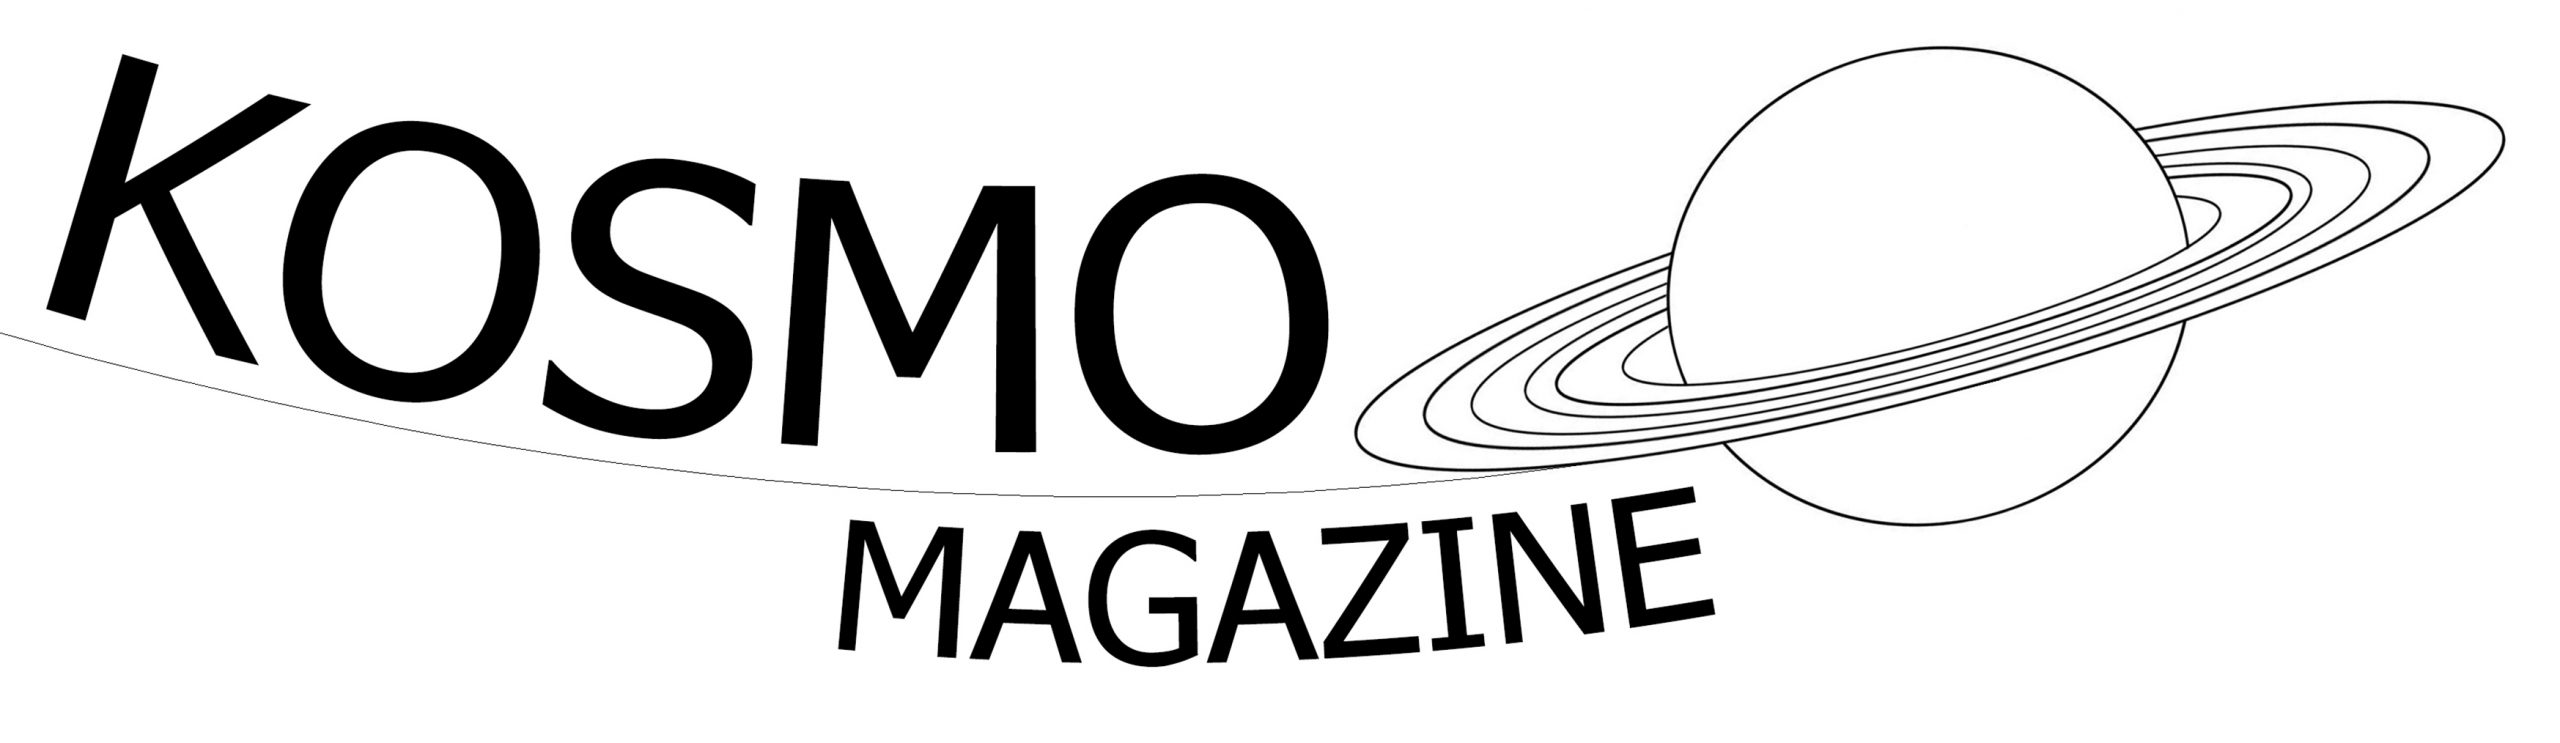 Kosmo Magazine